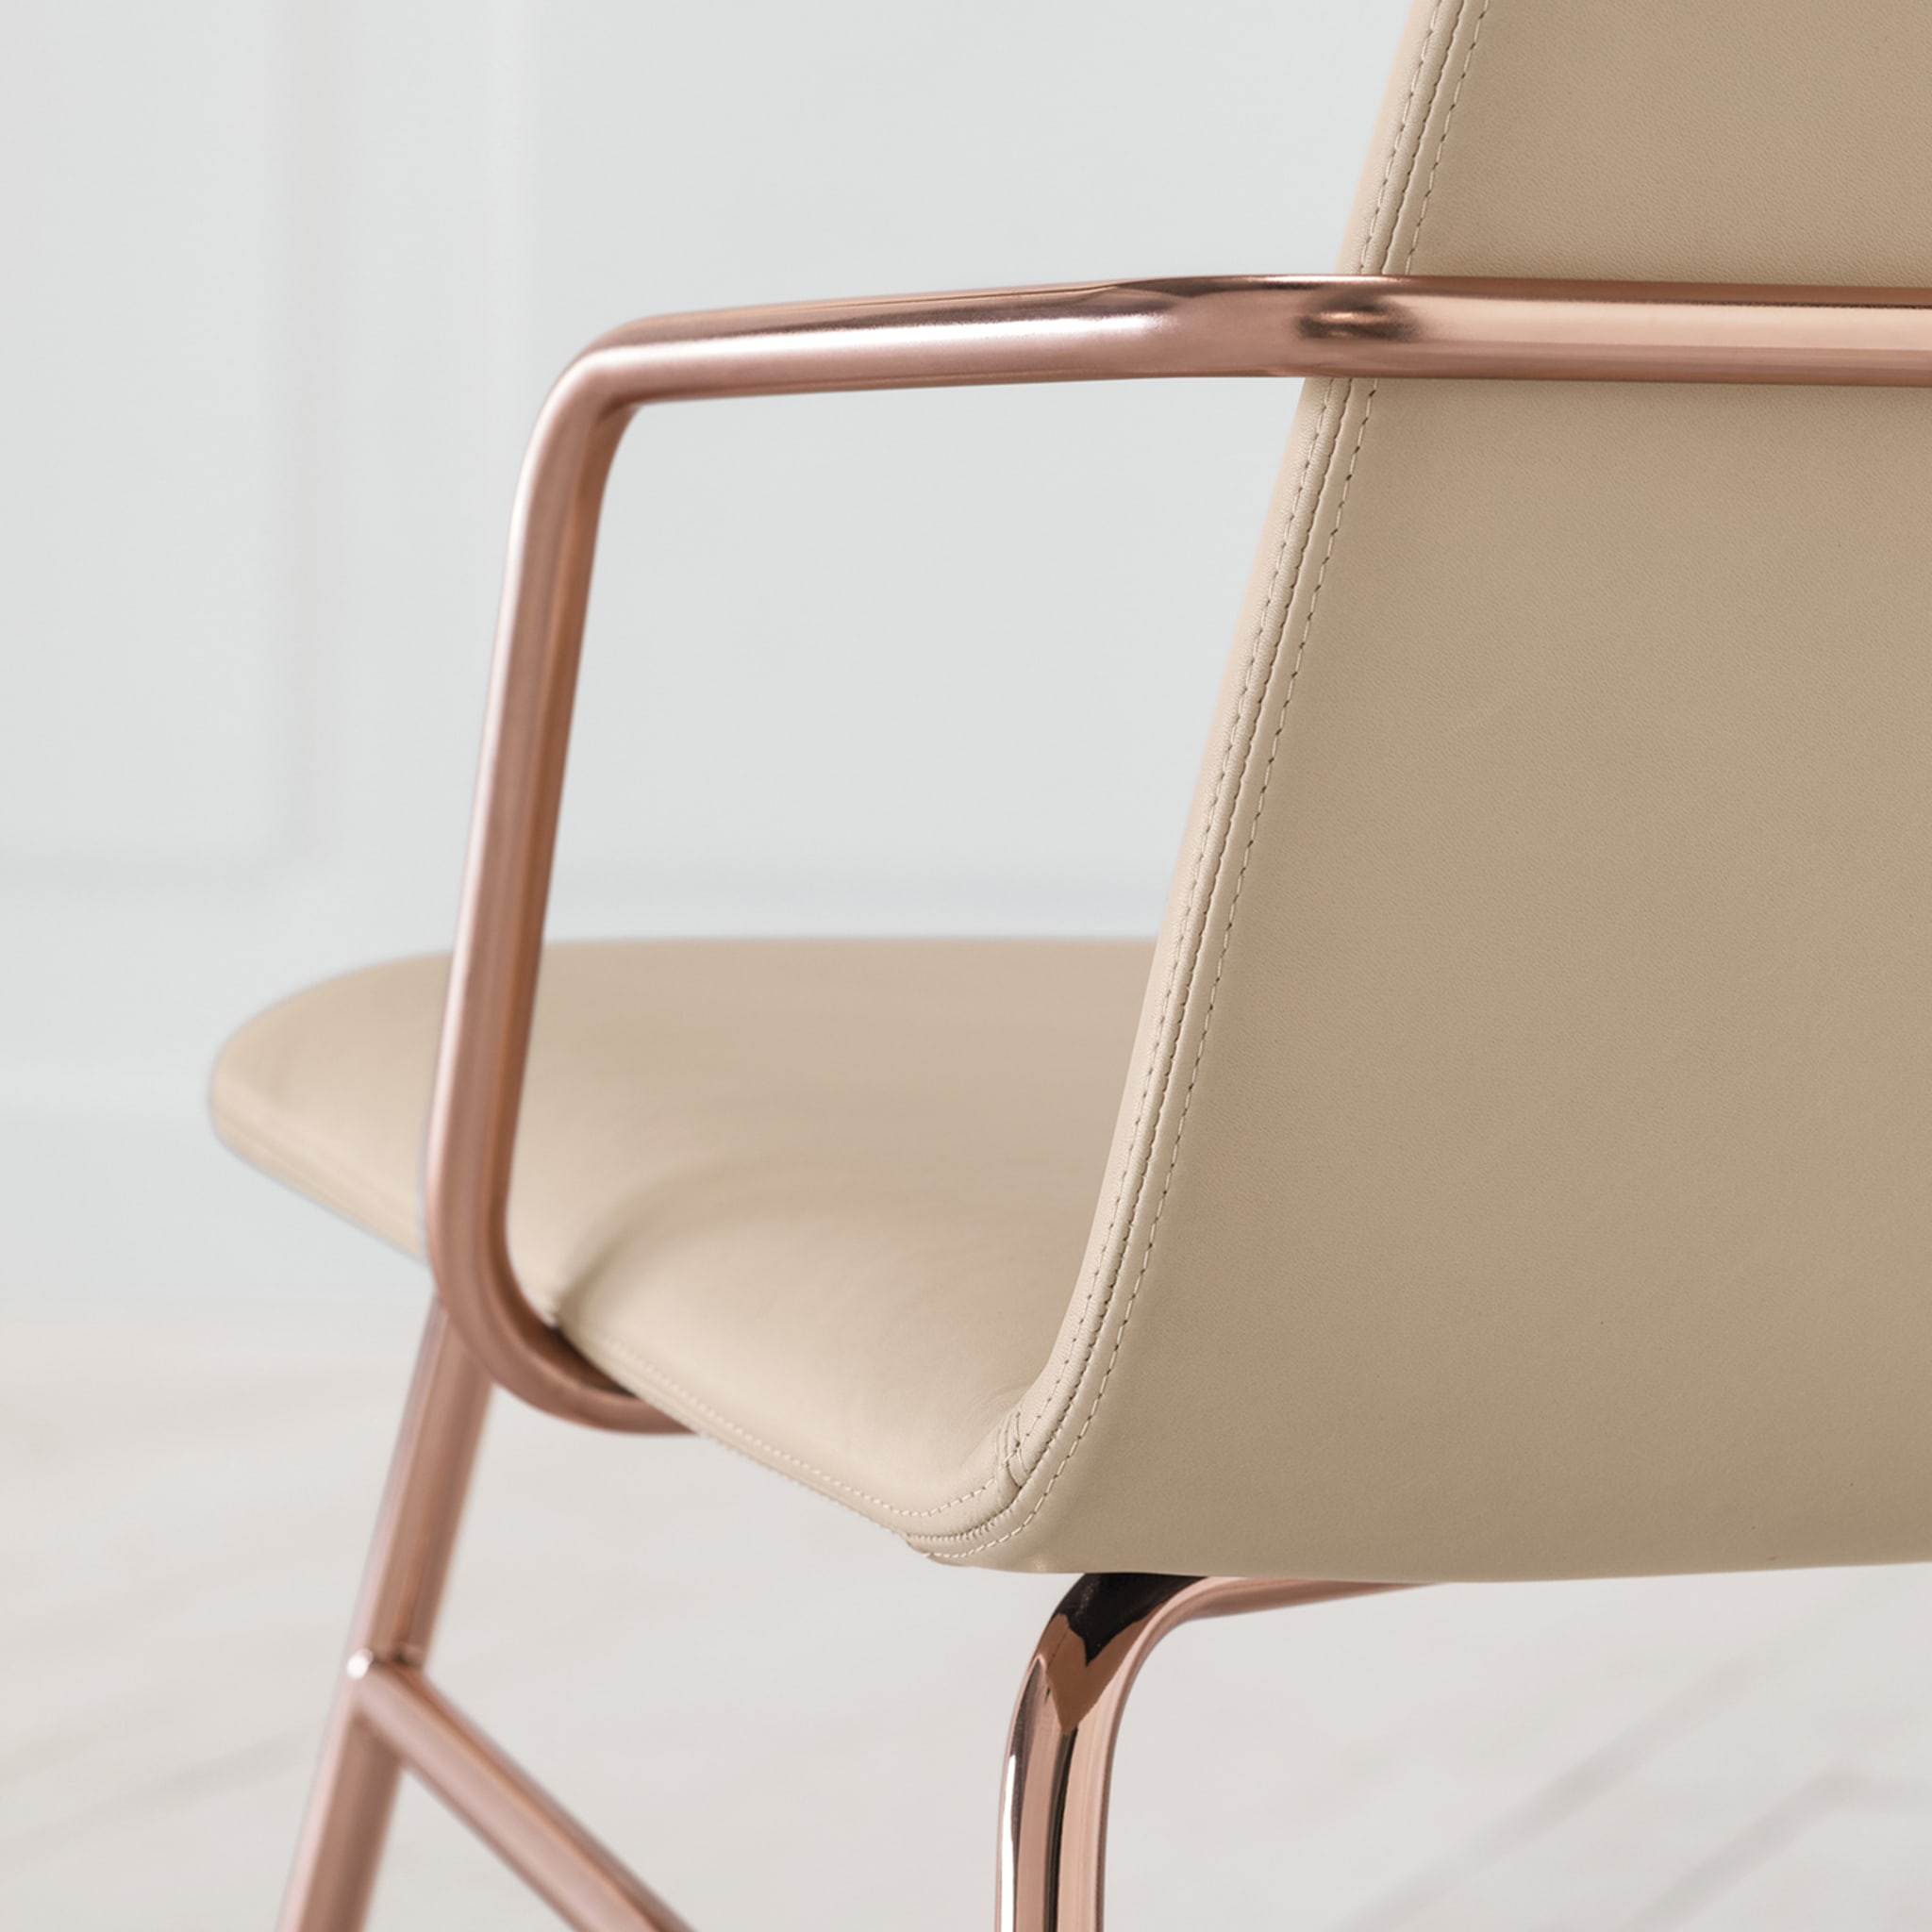 Bardot Met Copper Lounge chair by Emilio Nanni - Alternative view 1